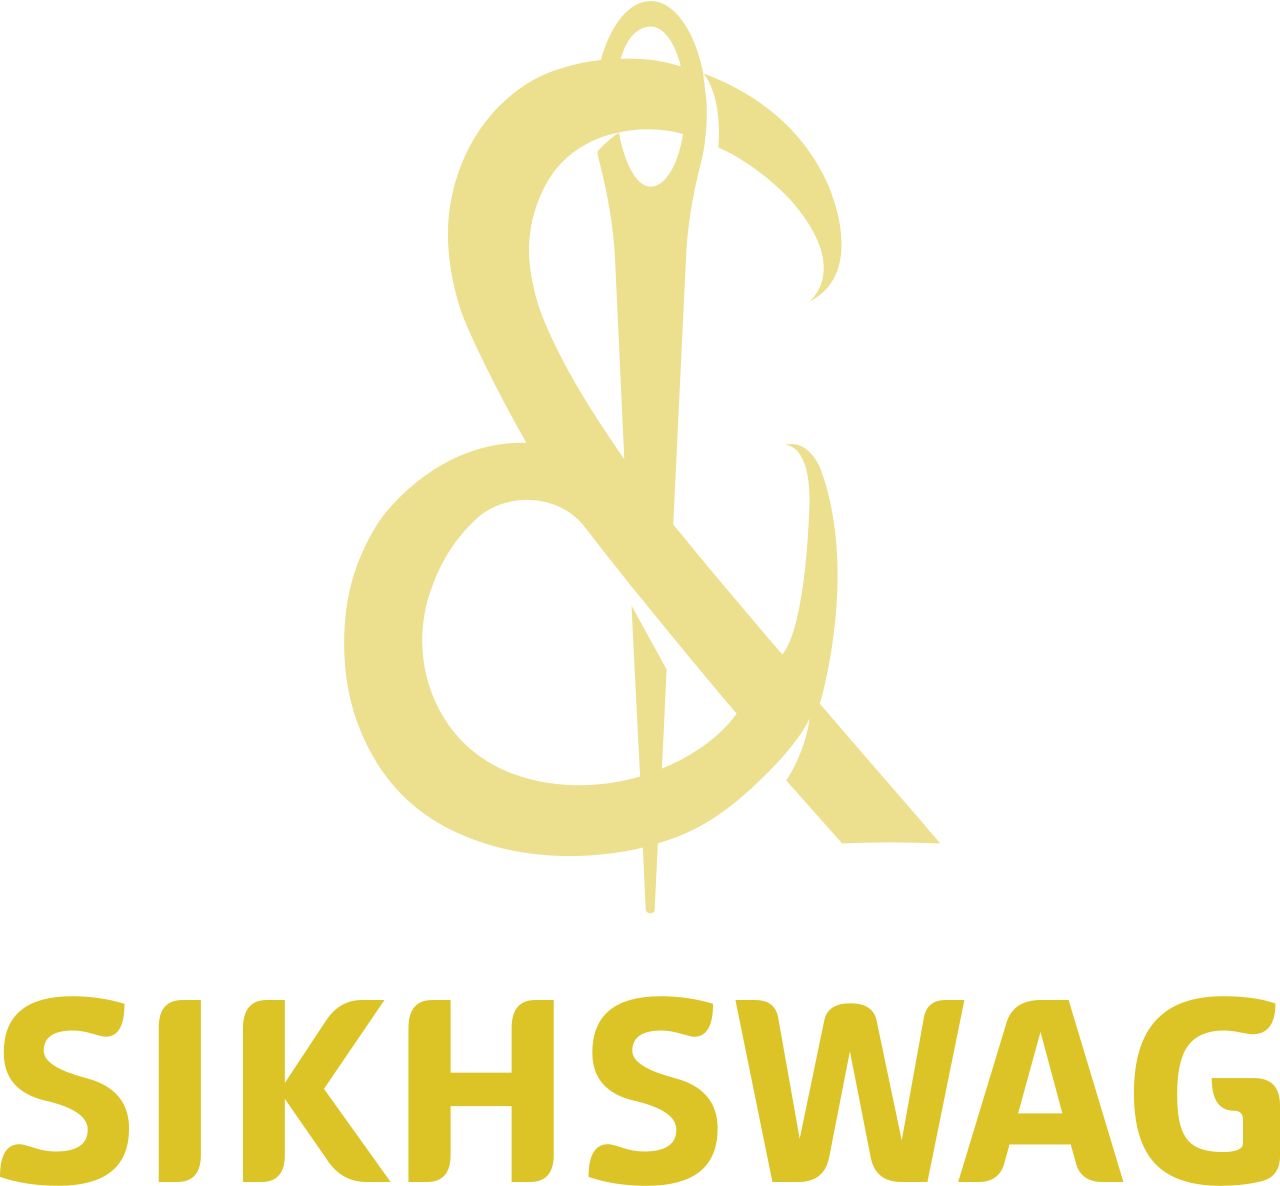 SIKHSWAG's logo